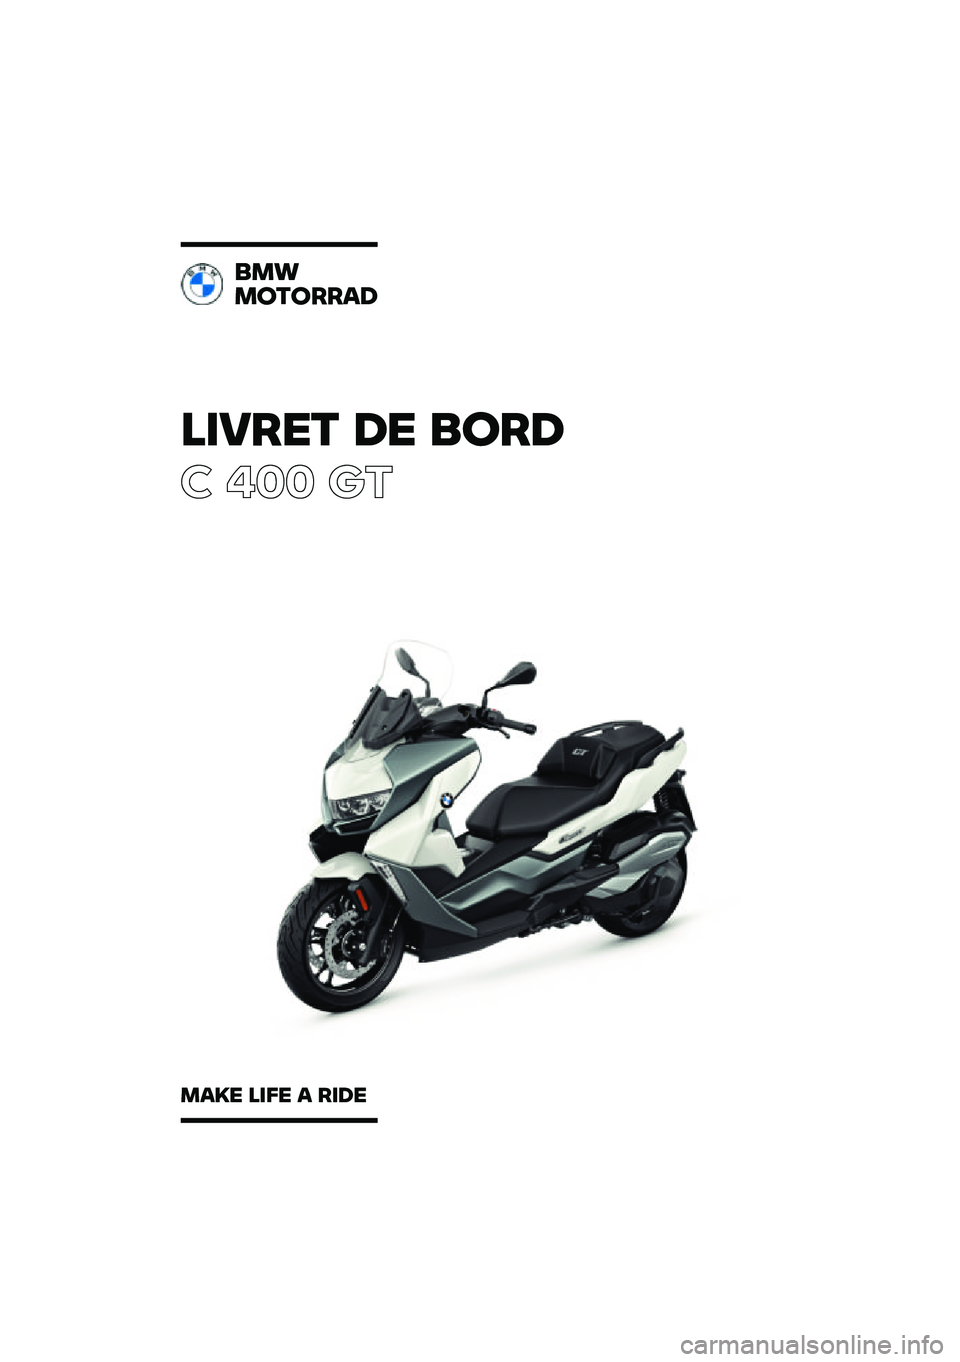 BMW MOTORRAD C 400 GT 2021  Livret de bord (in French) ������ �\b� �	�
��\b
� ��� ��\b
�	��\f
��
��
���
�\b
��
�� ���� �
 ���\b� 